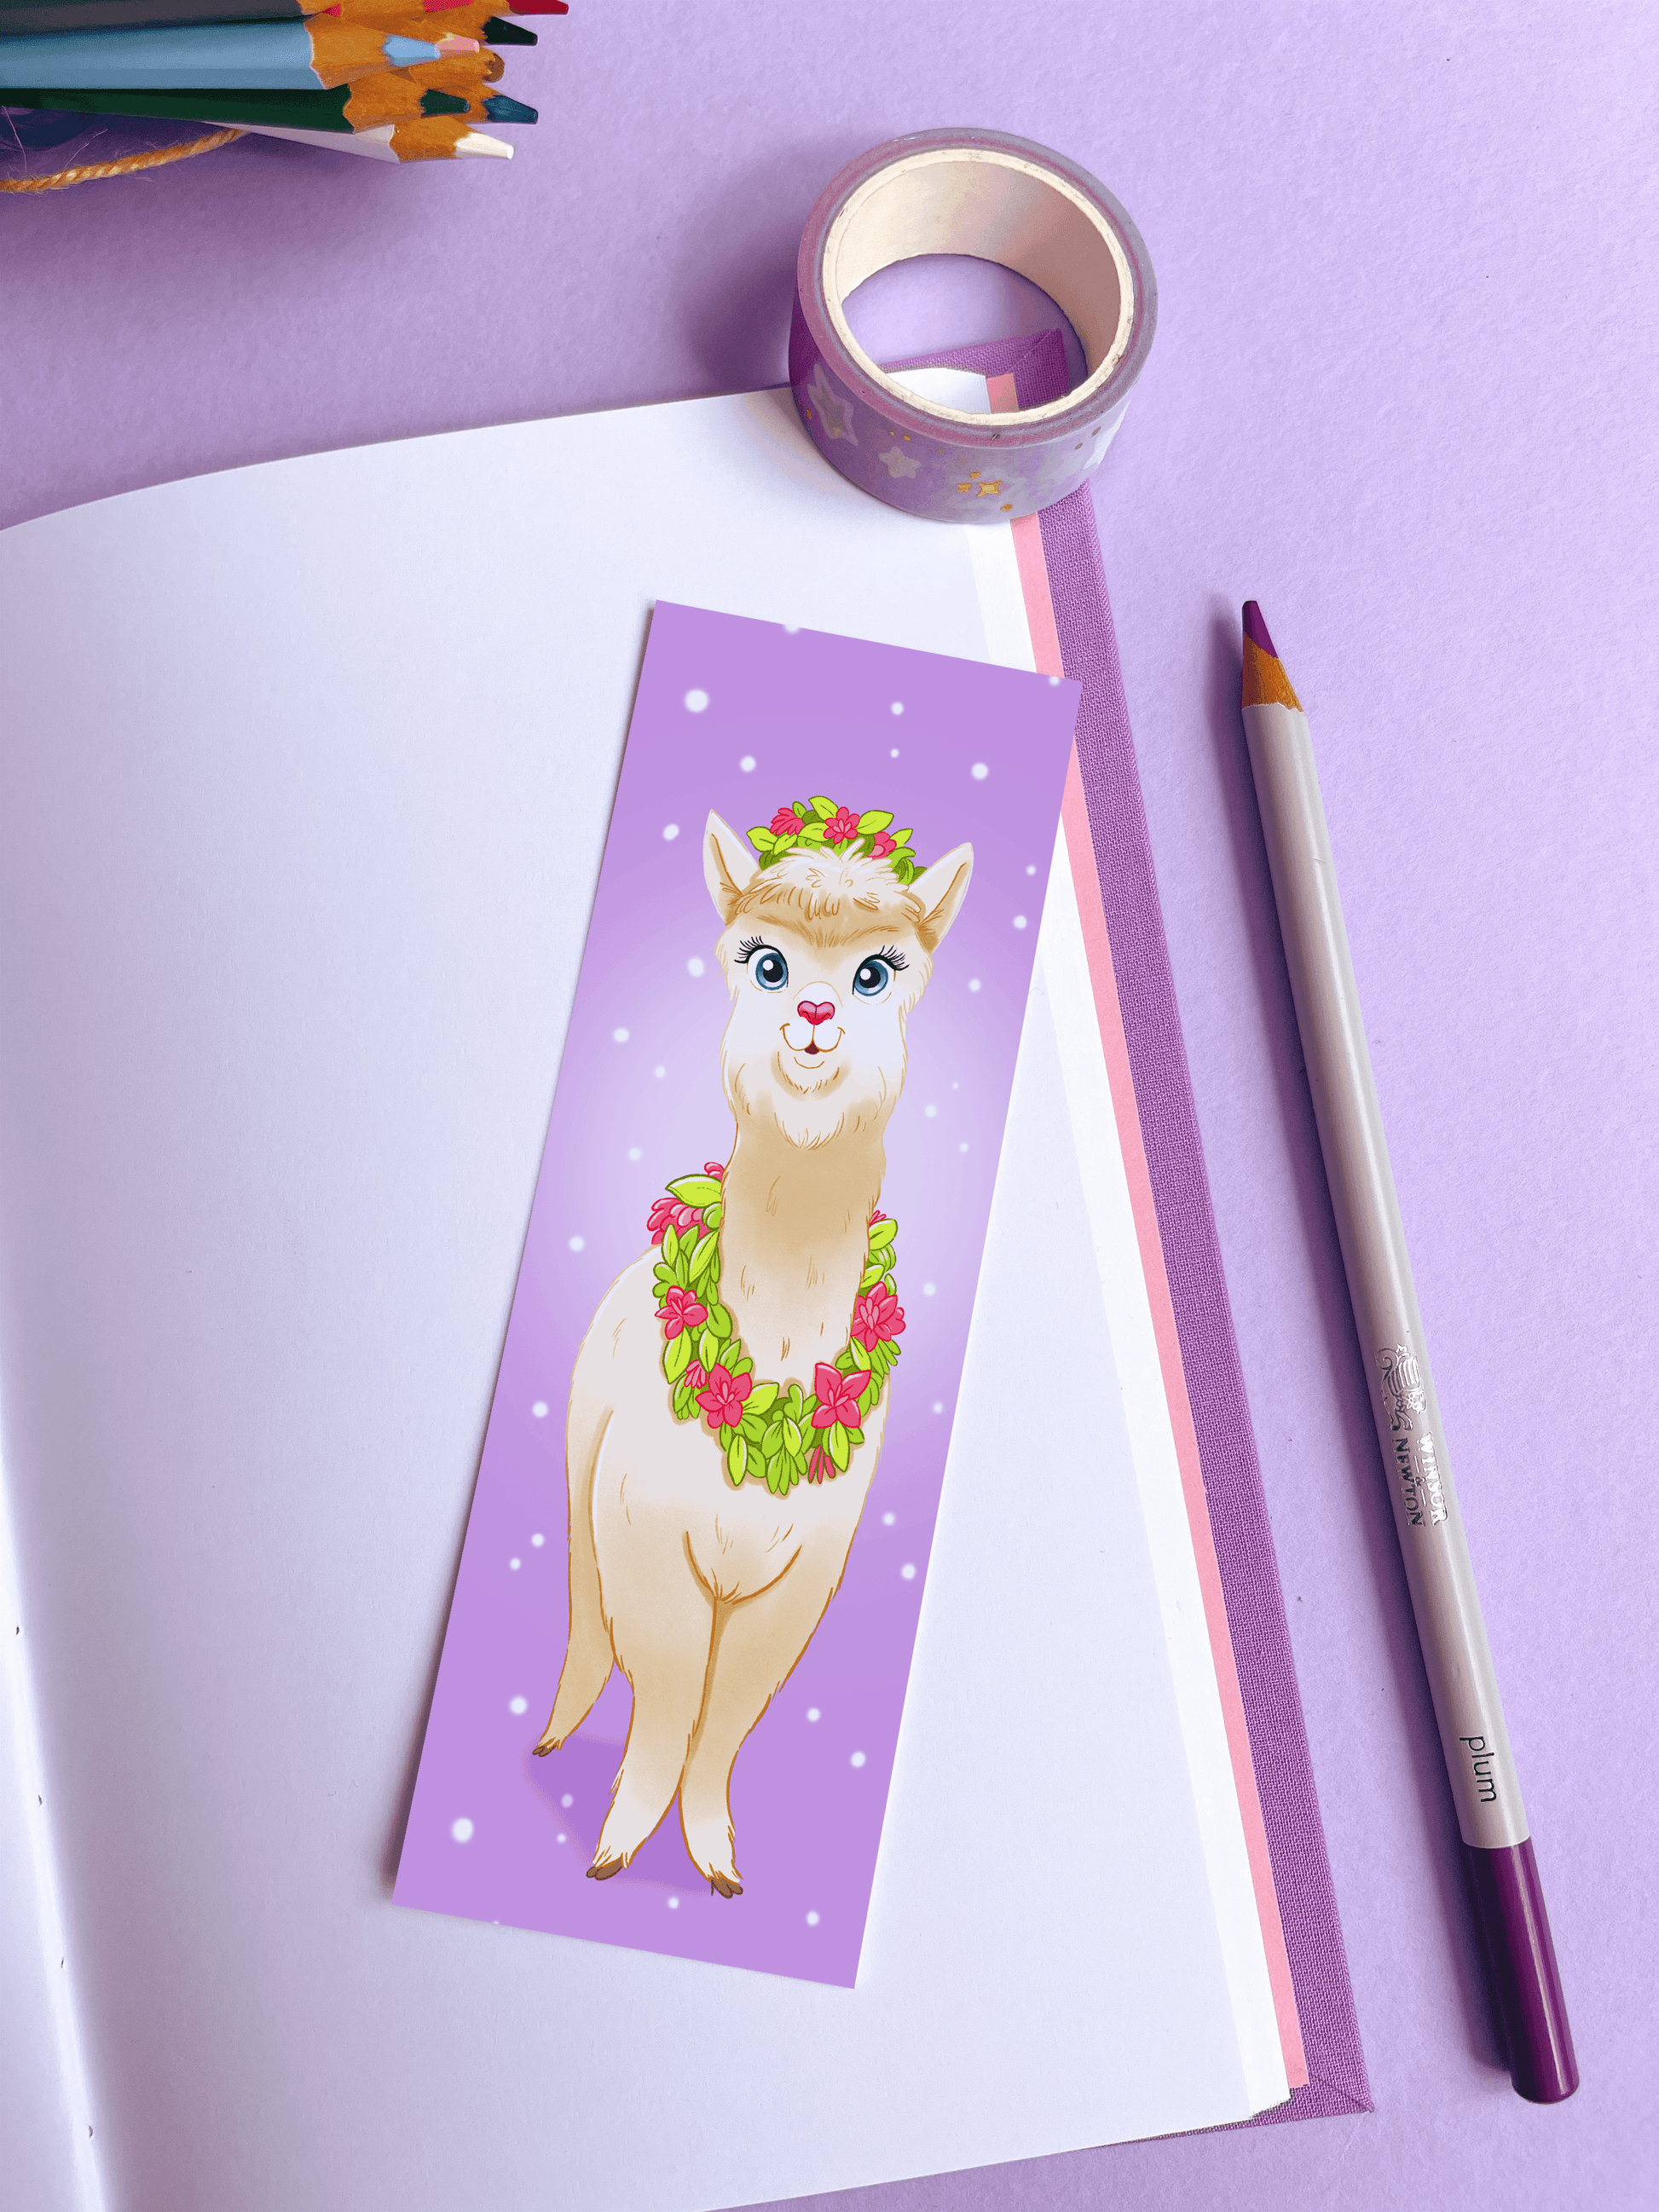 Trixie the Alpaca Illustrated Bookmark - Emily Harvey Art